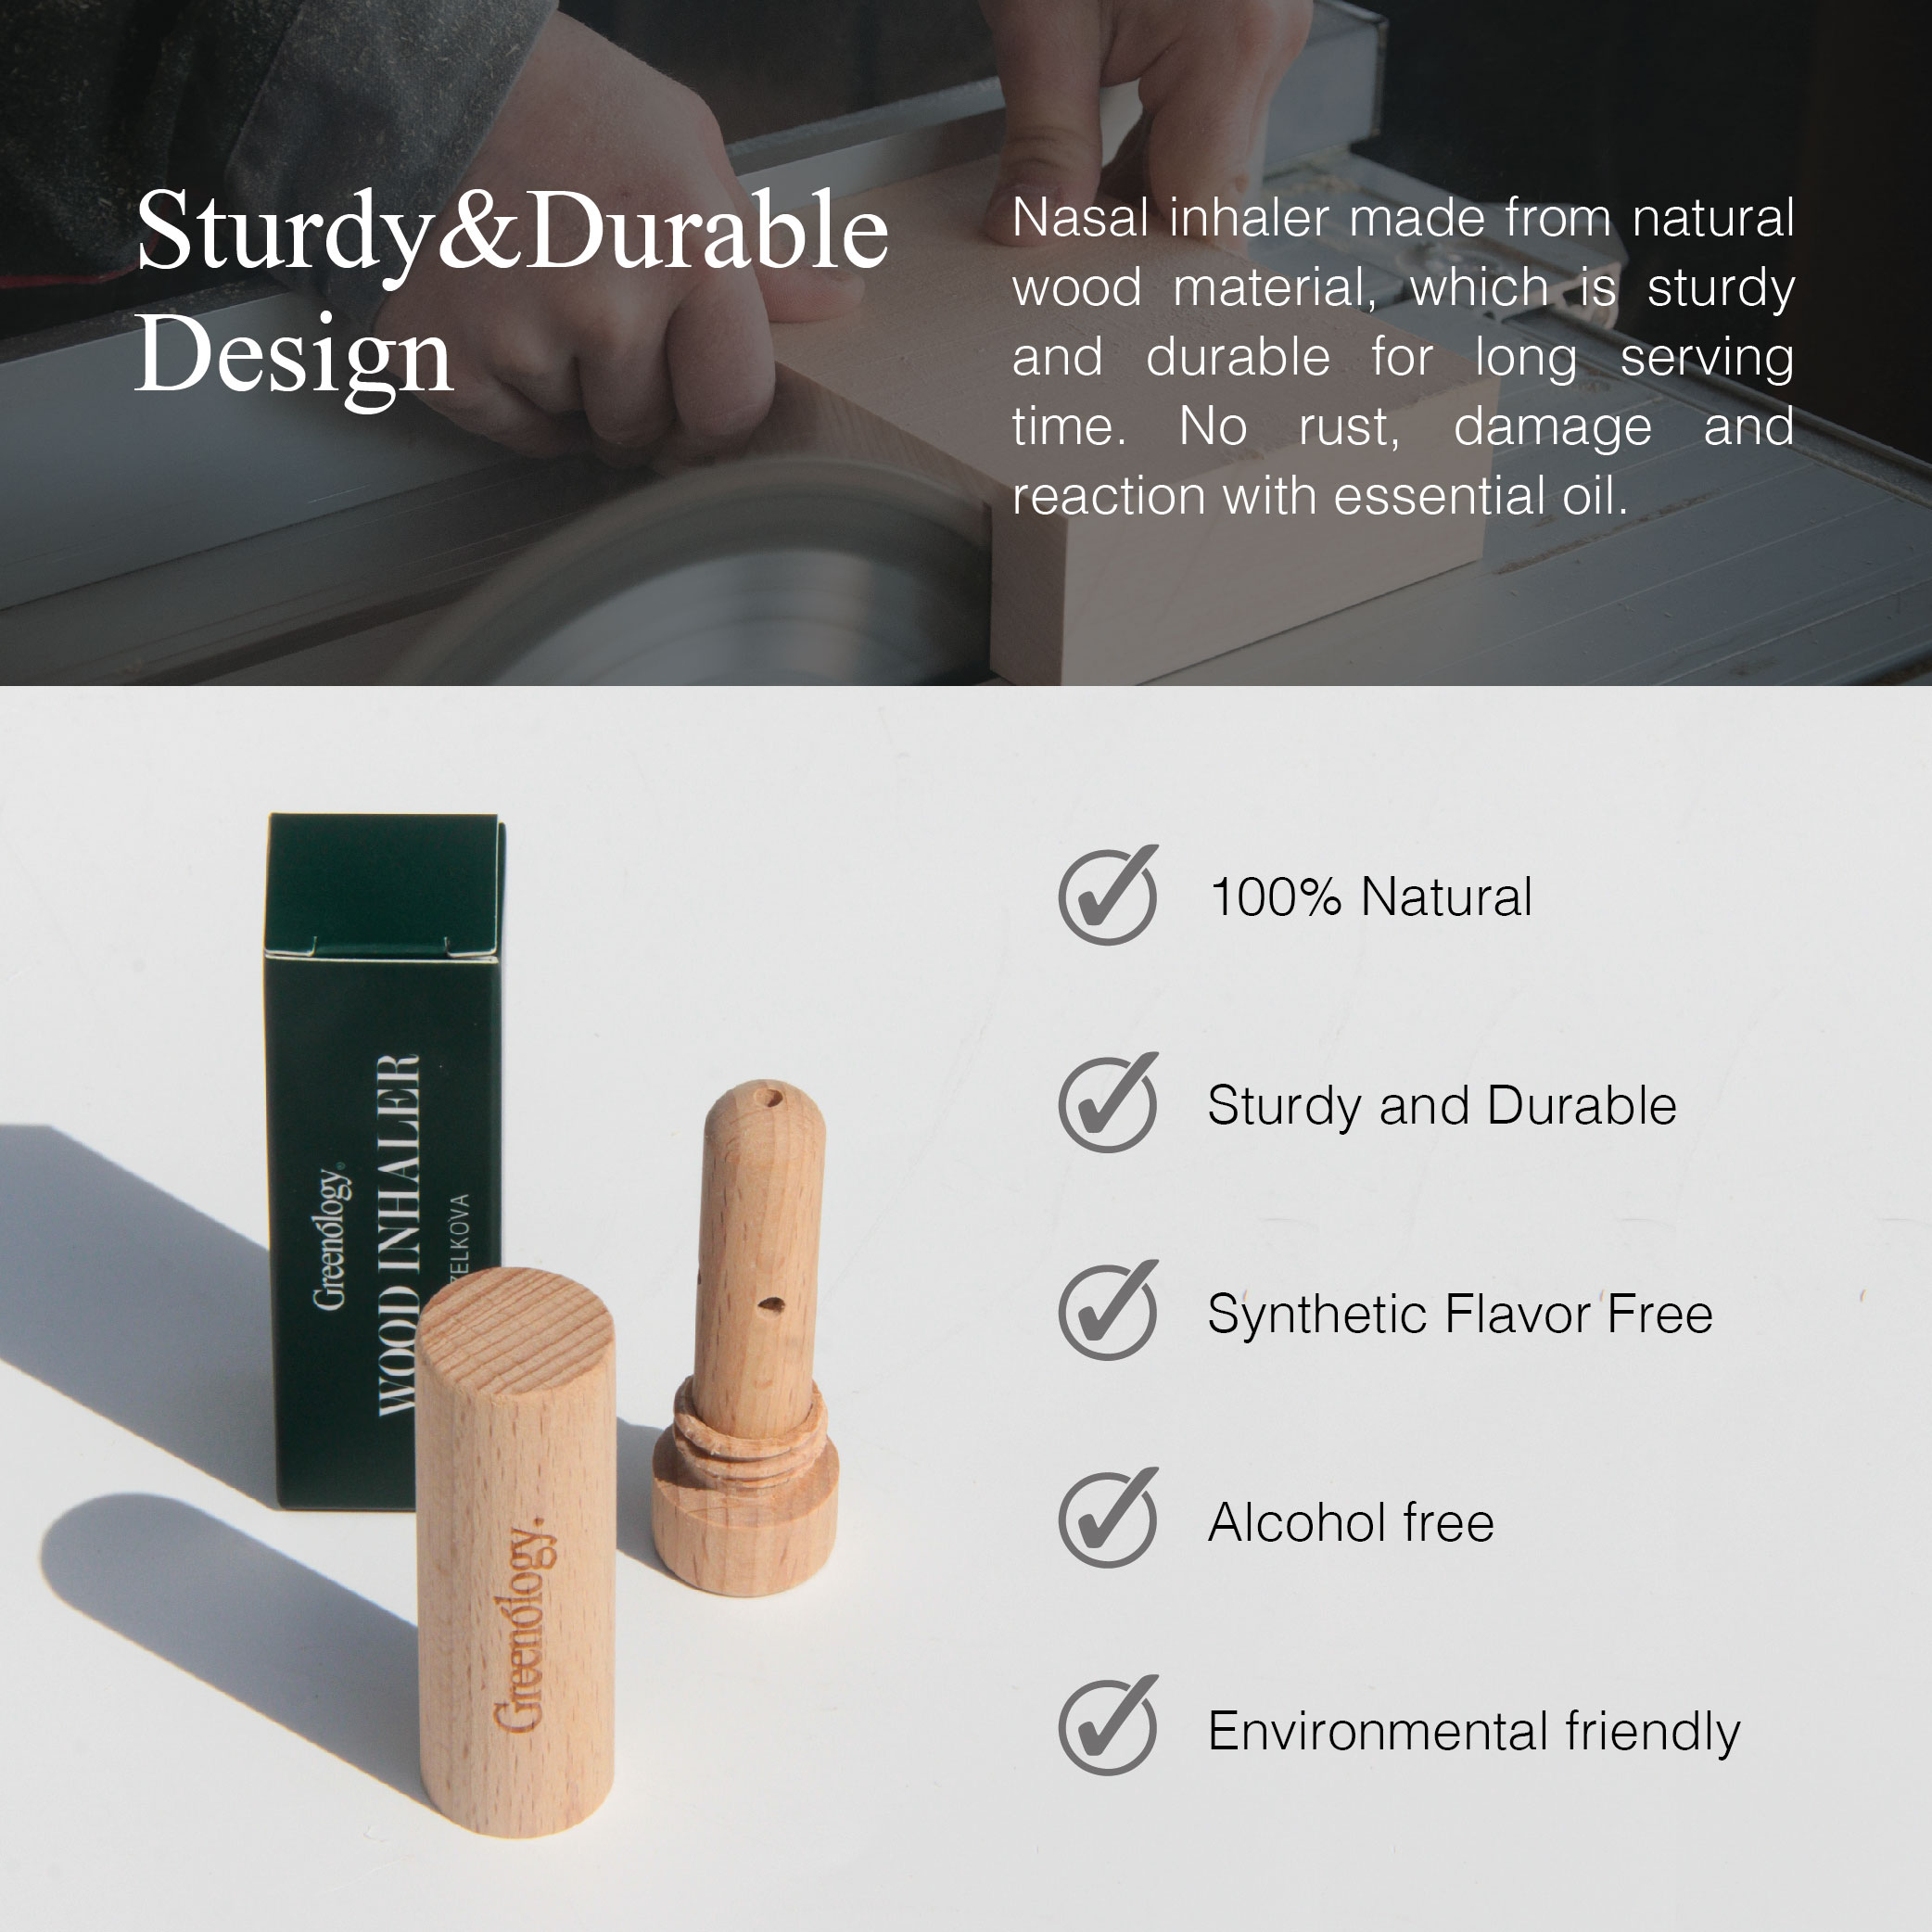 Greenology_Wood Inhaler_Product Description-03